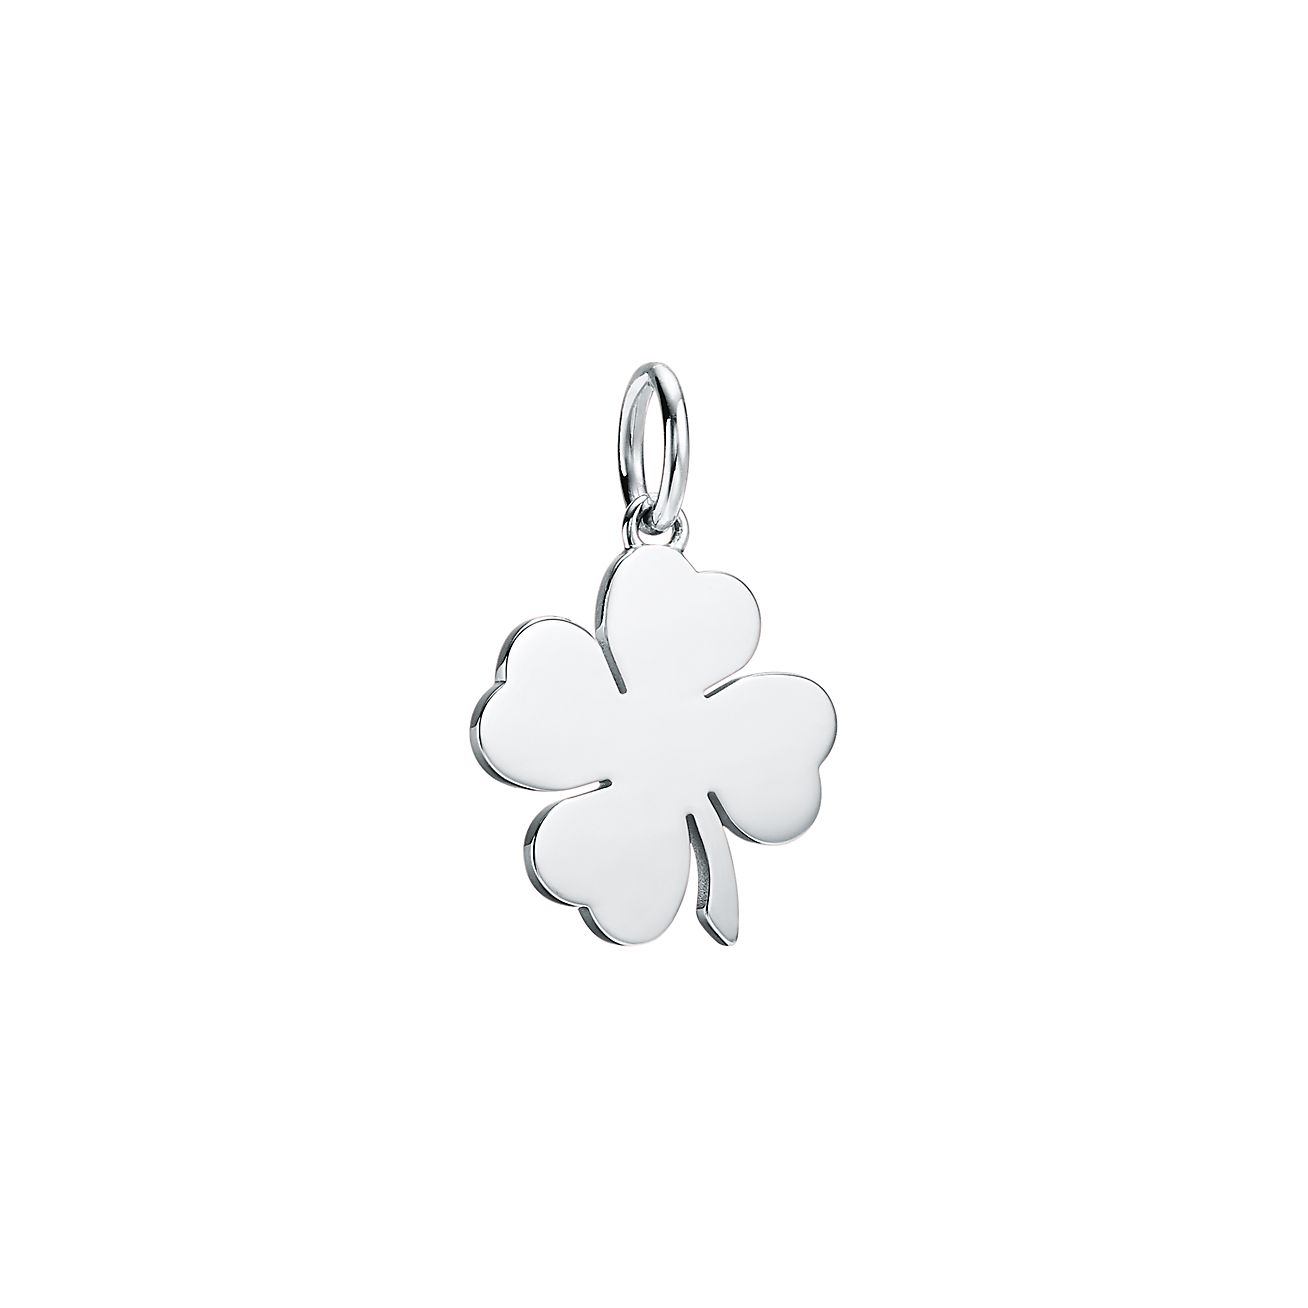 four leaf clover necklace tiffany